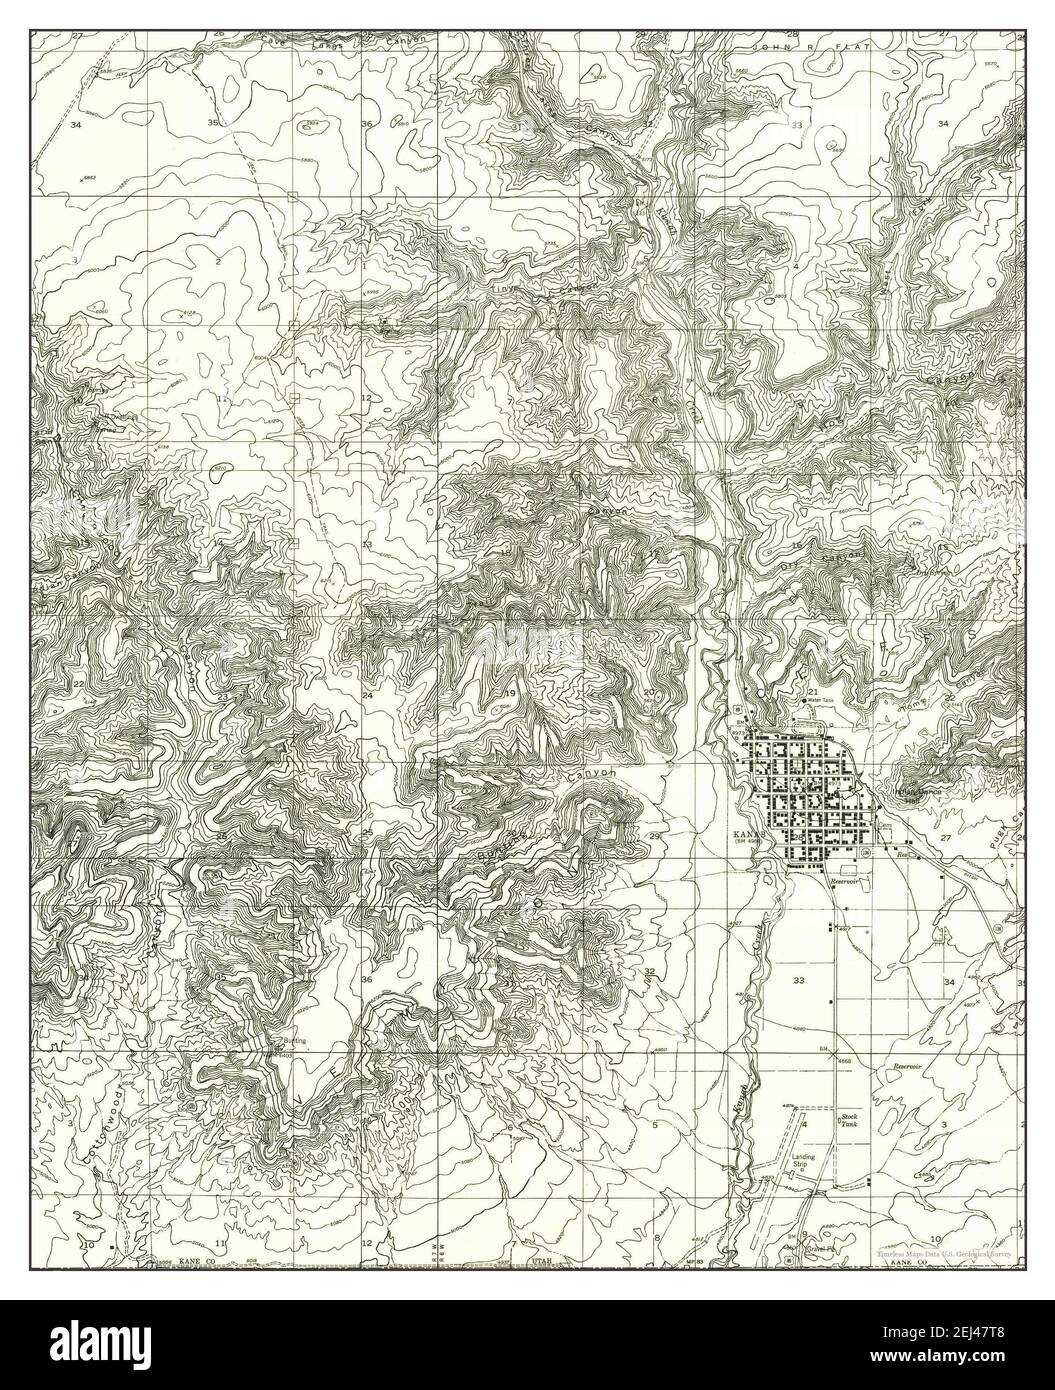 Kanab se, Utah, map 1954, 1:24000, United States of America by Timeless Maps, data U.S. Geological Survey Foto Stock